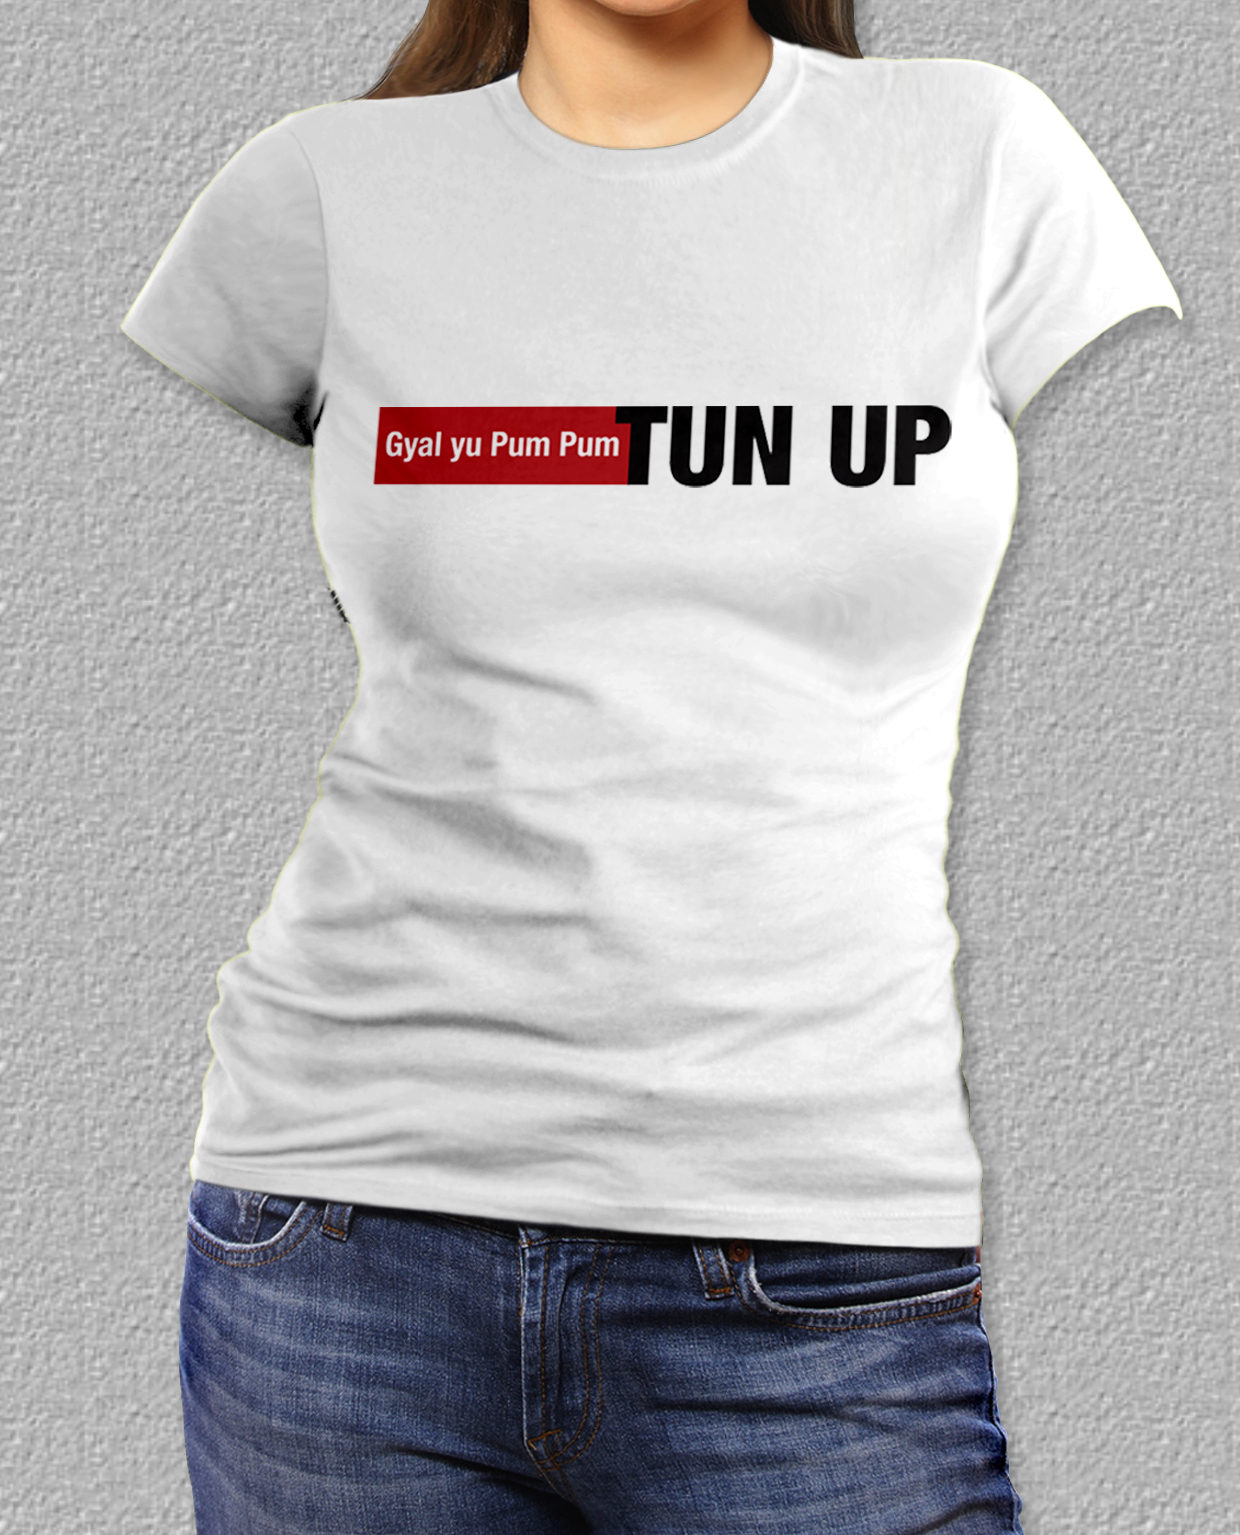 Female T-Shirt Mock-Up